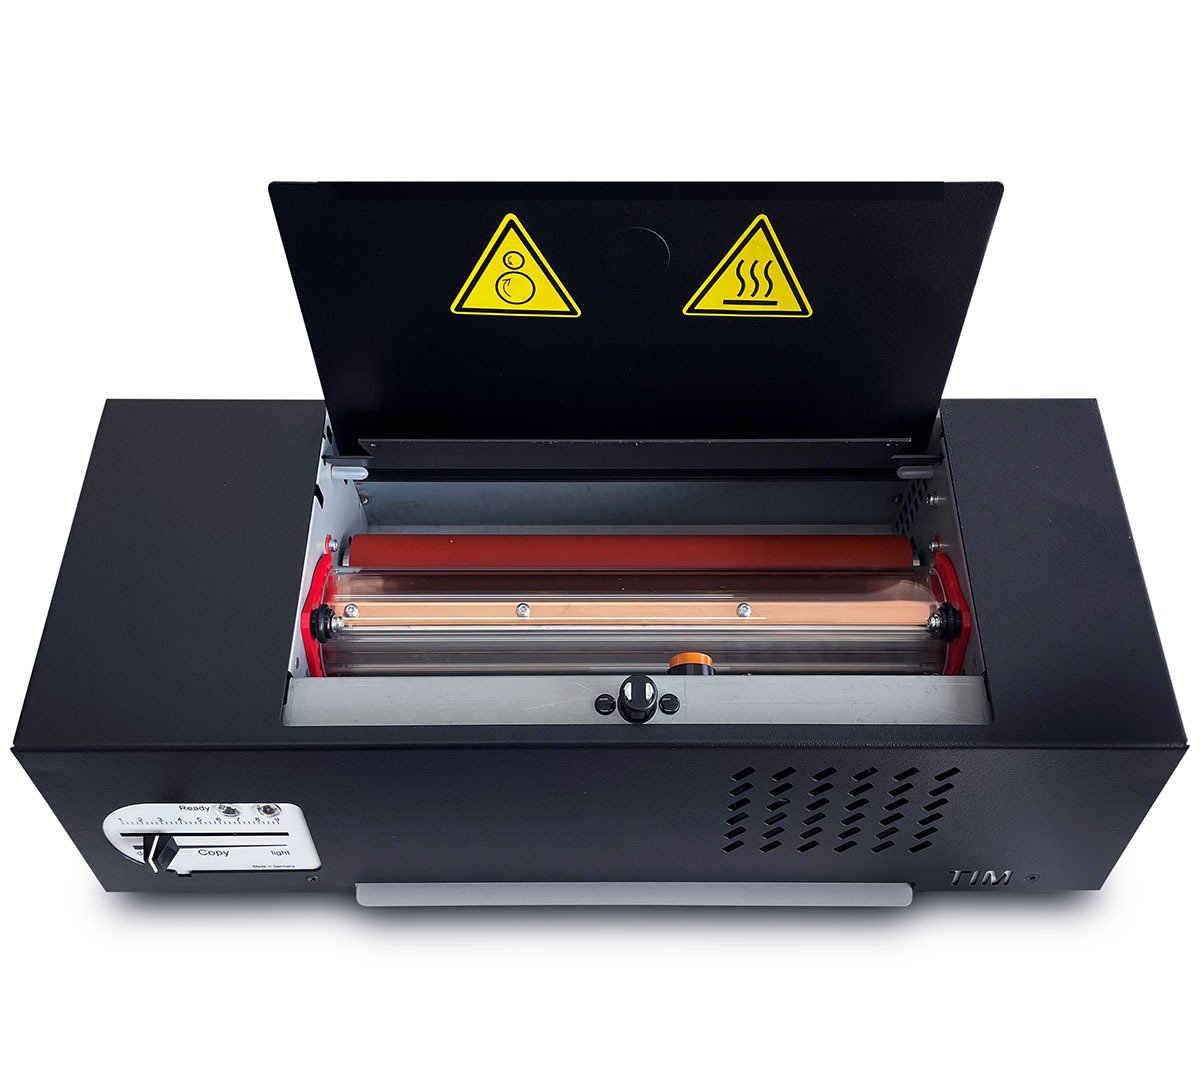 Pro Black Tattoo Transfer Copier Printer Machine Thermal Stencil Paper Maker  UK | eBay